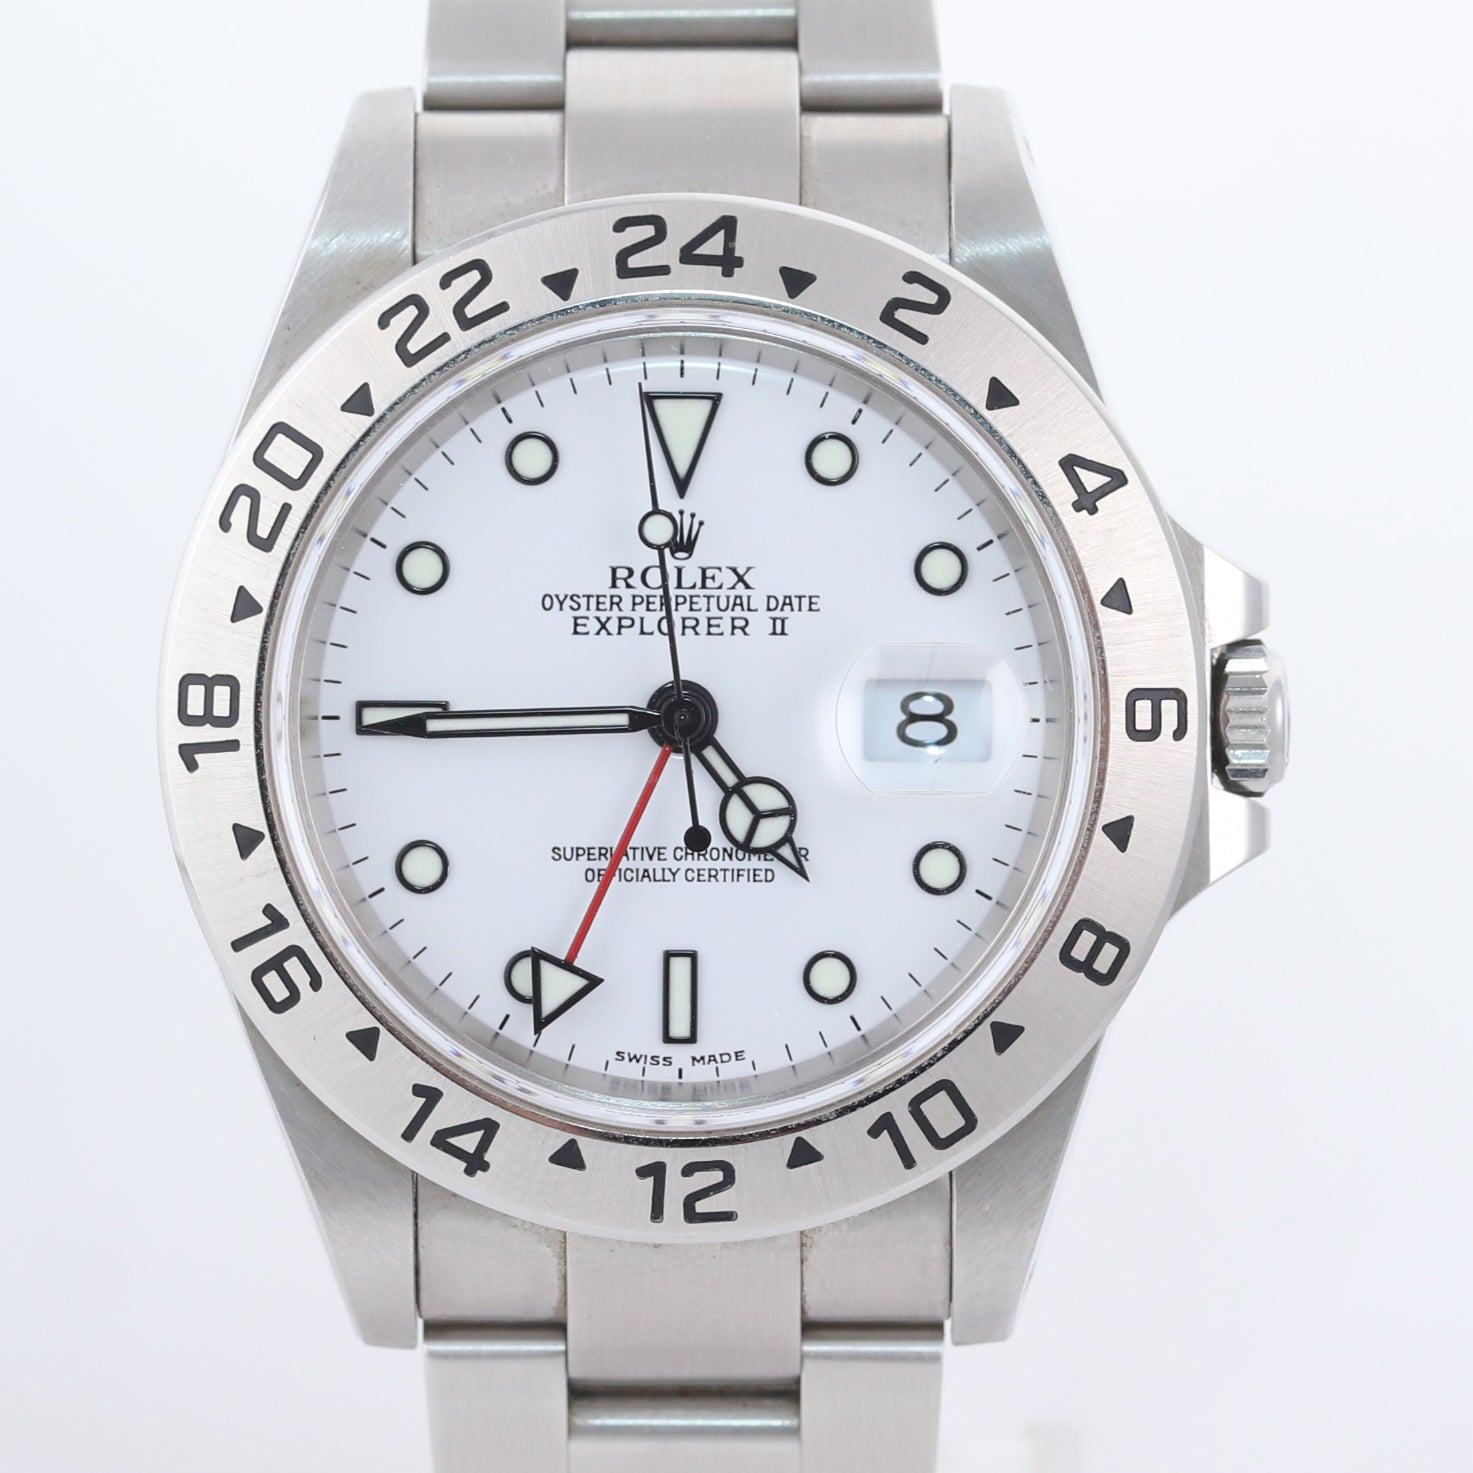 Unpolished Rolex Explorer II 16570 Steel White Polar Date GMT 40mm SEL Watch Box